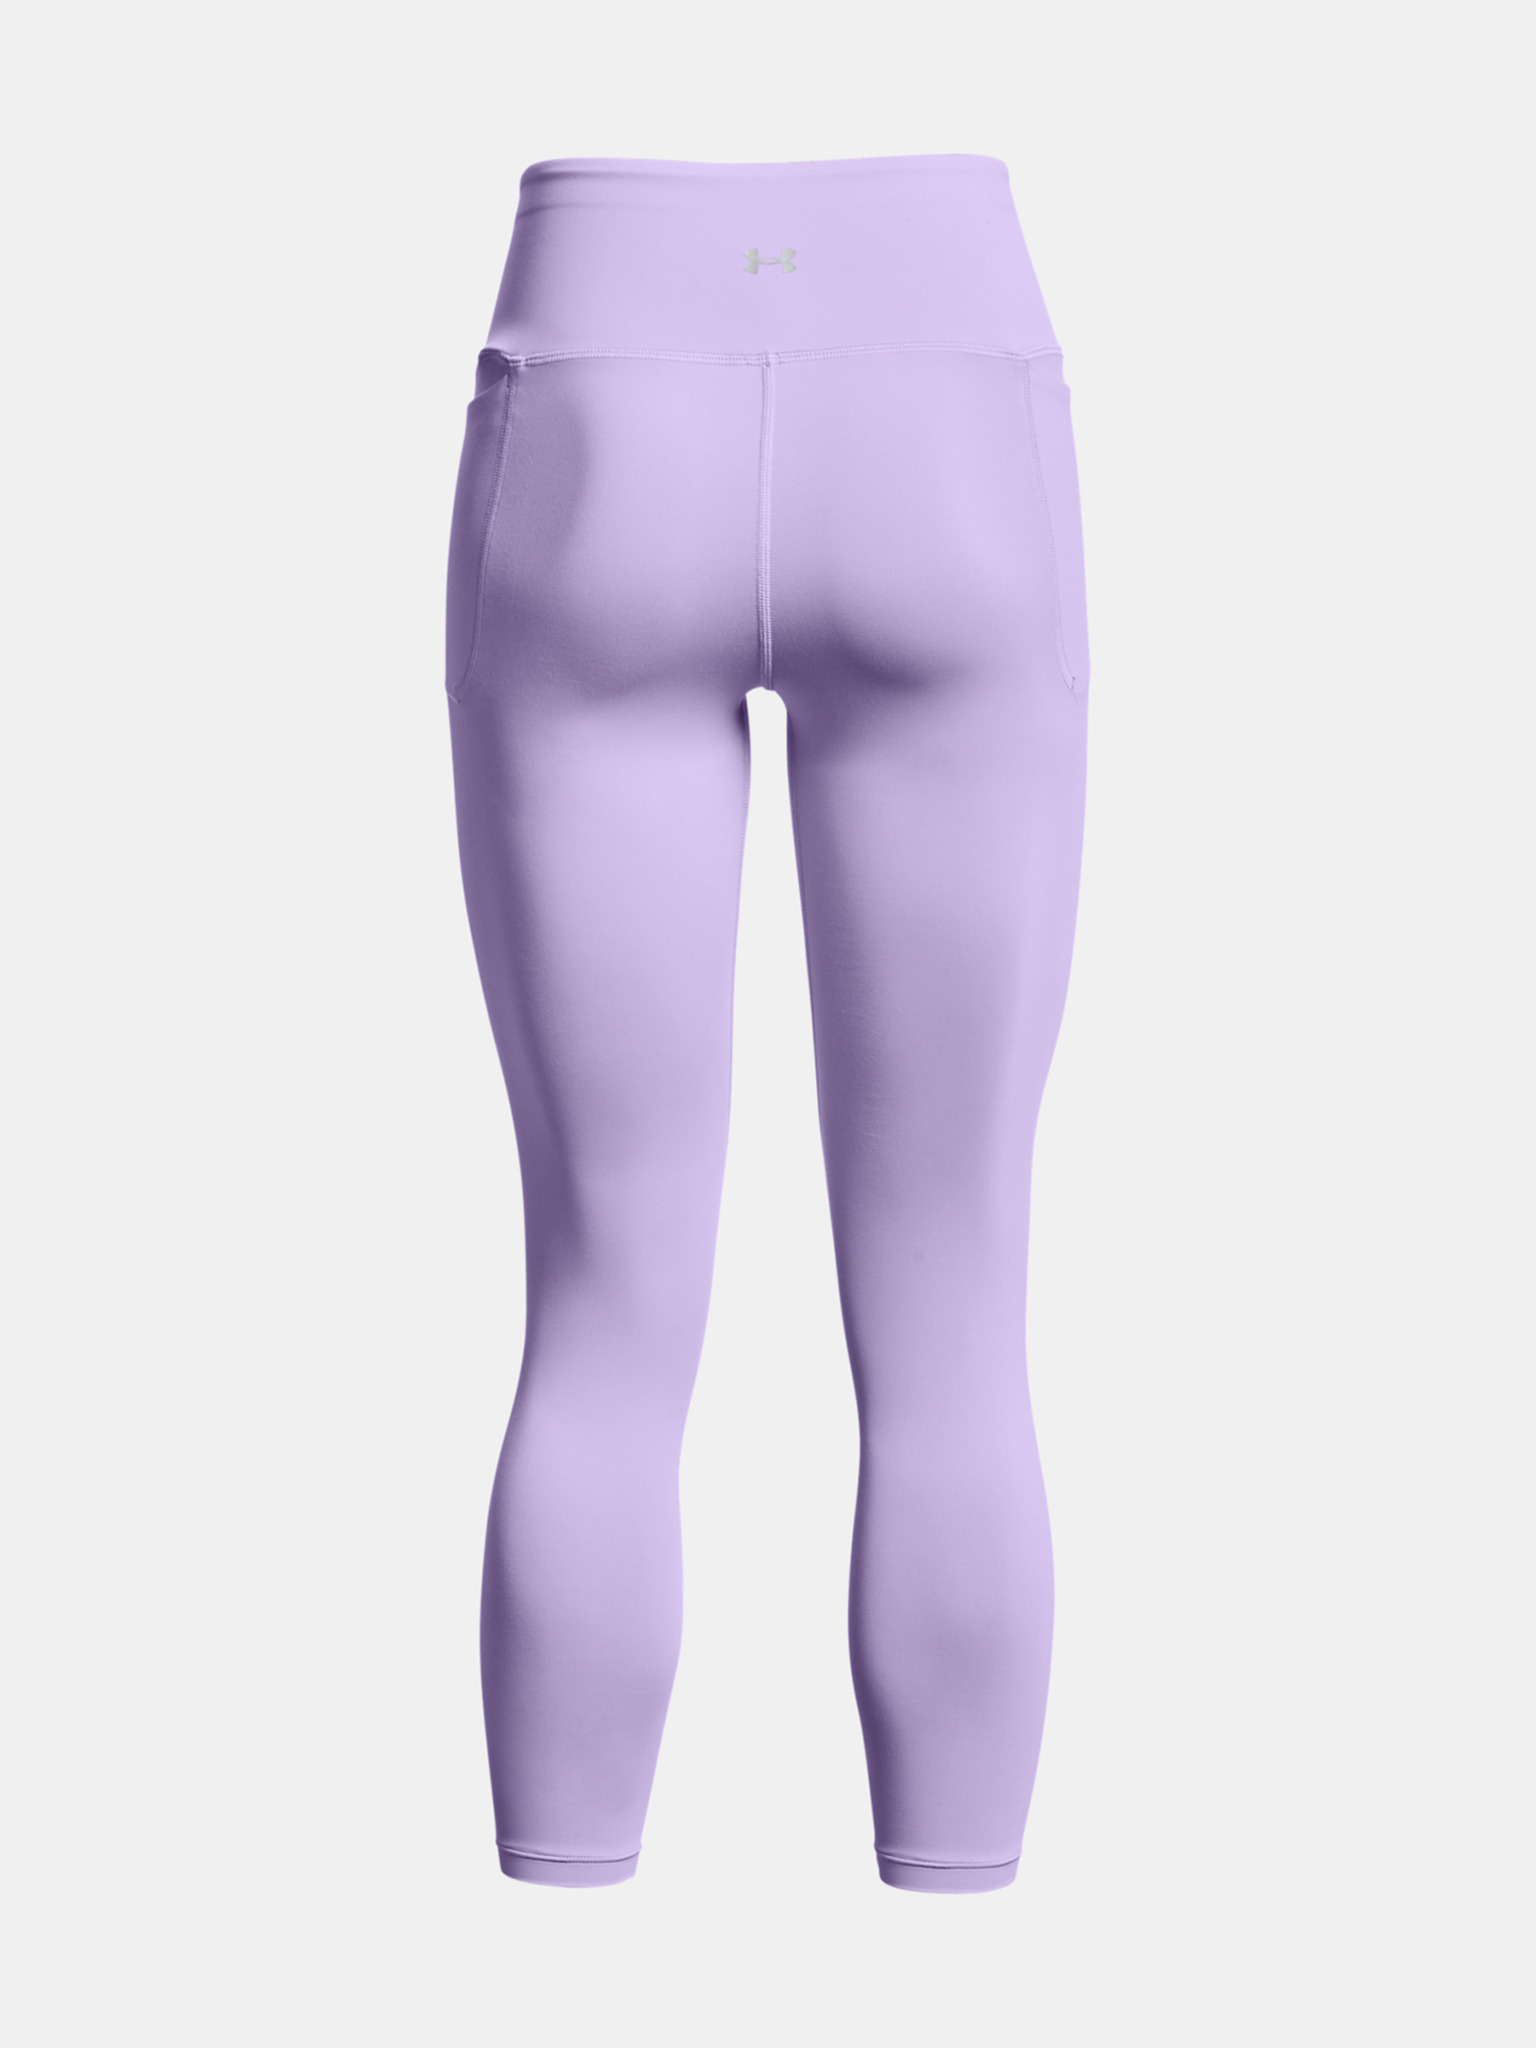 Under Armour Women's Meridian Full Length Leggings - Purple - Size XS